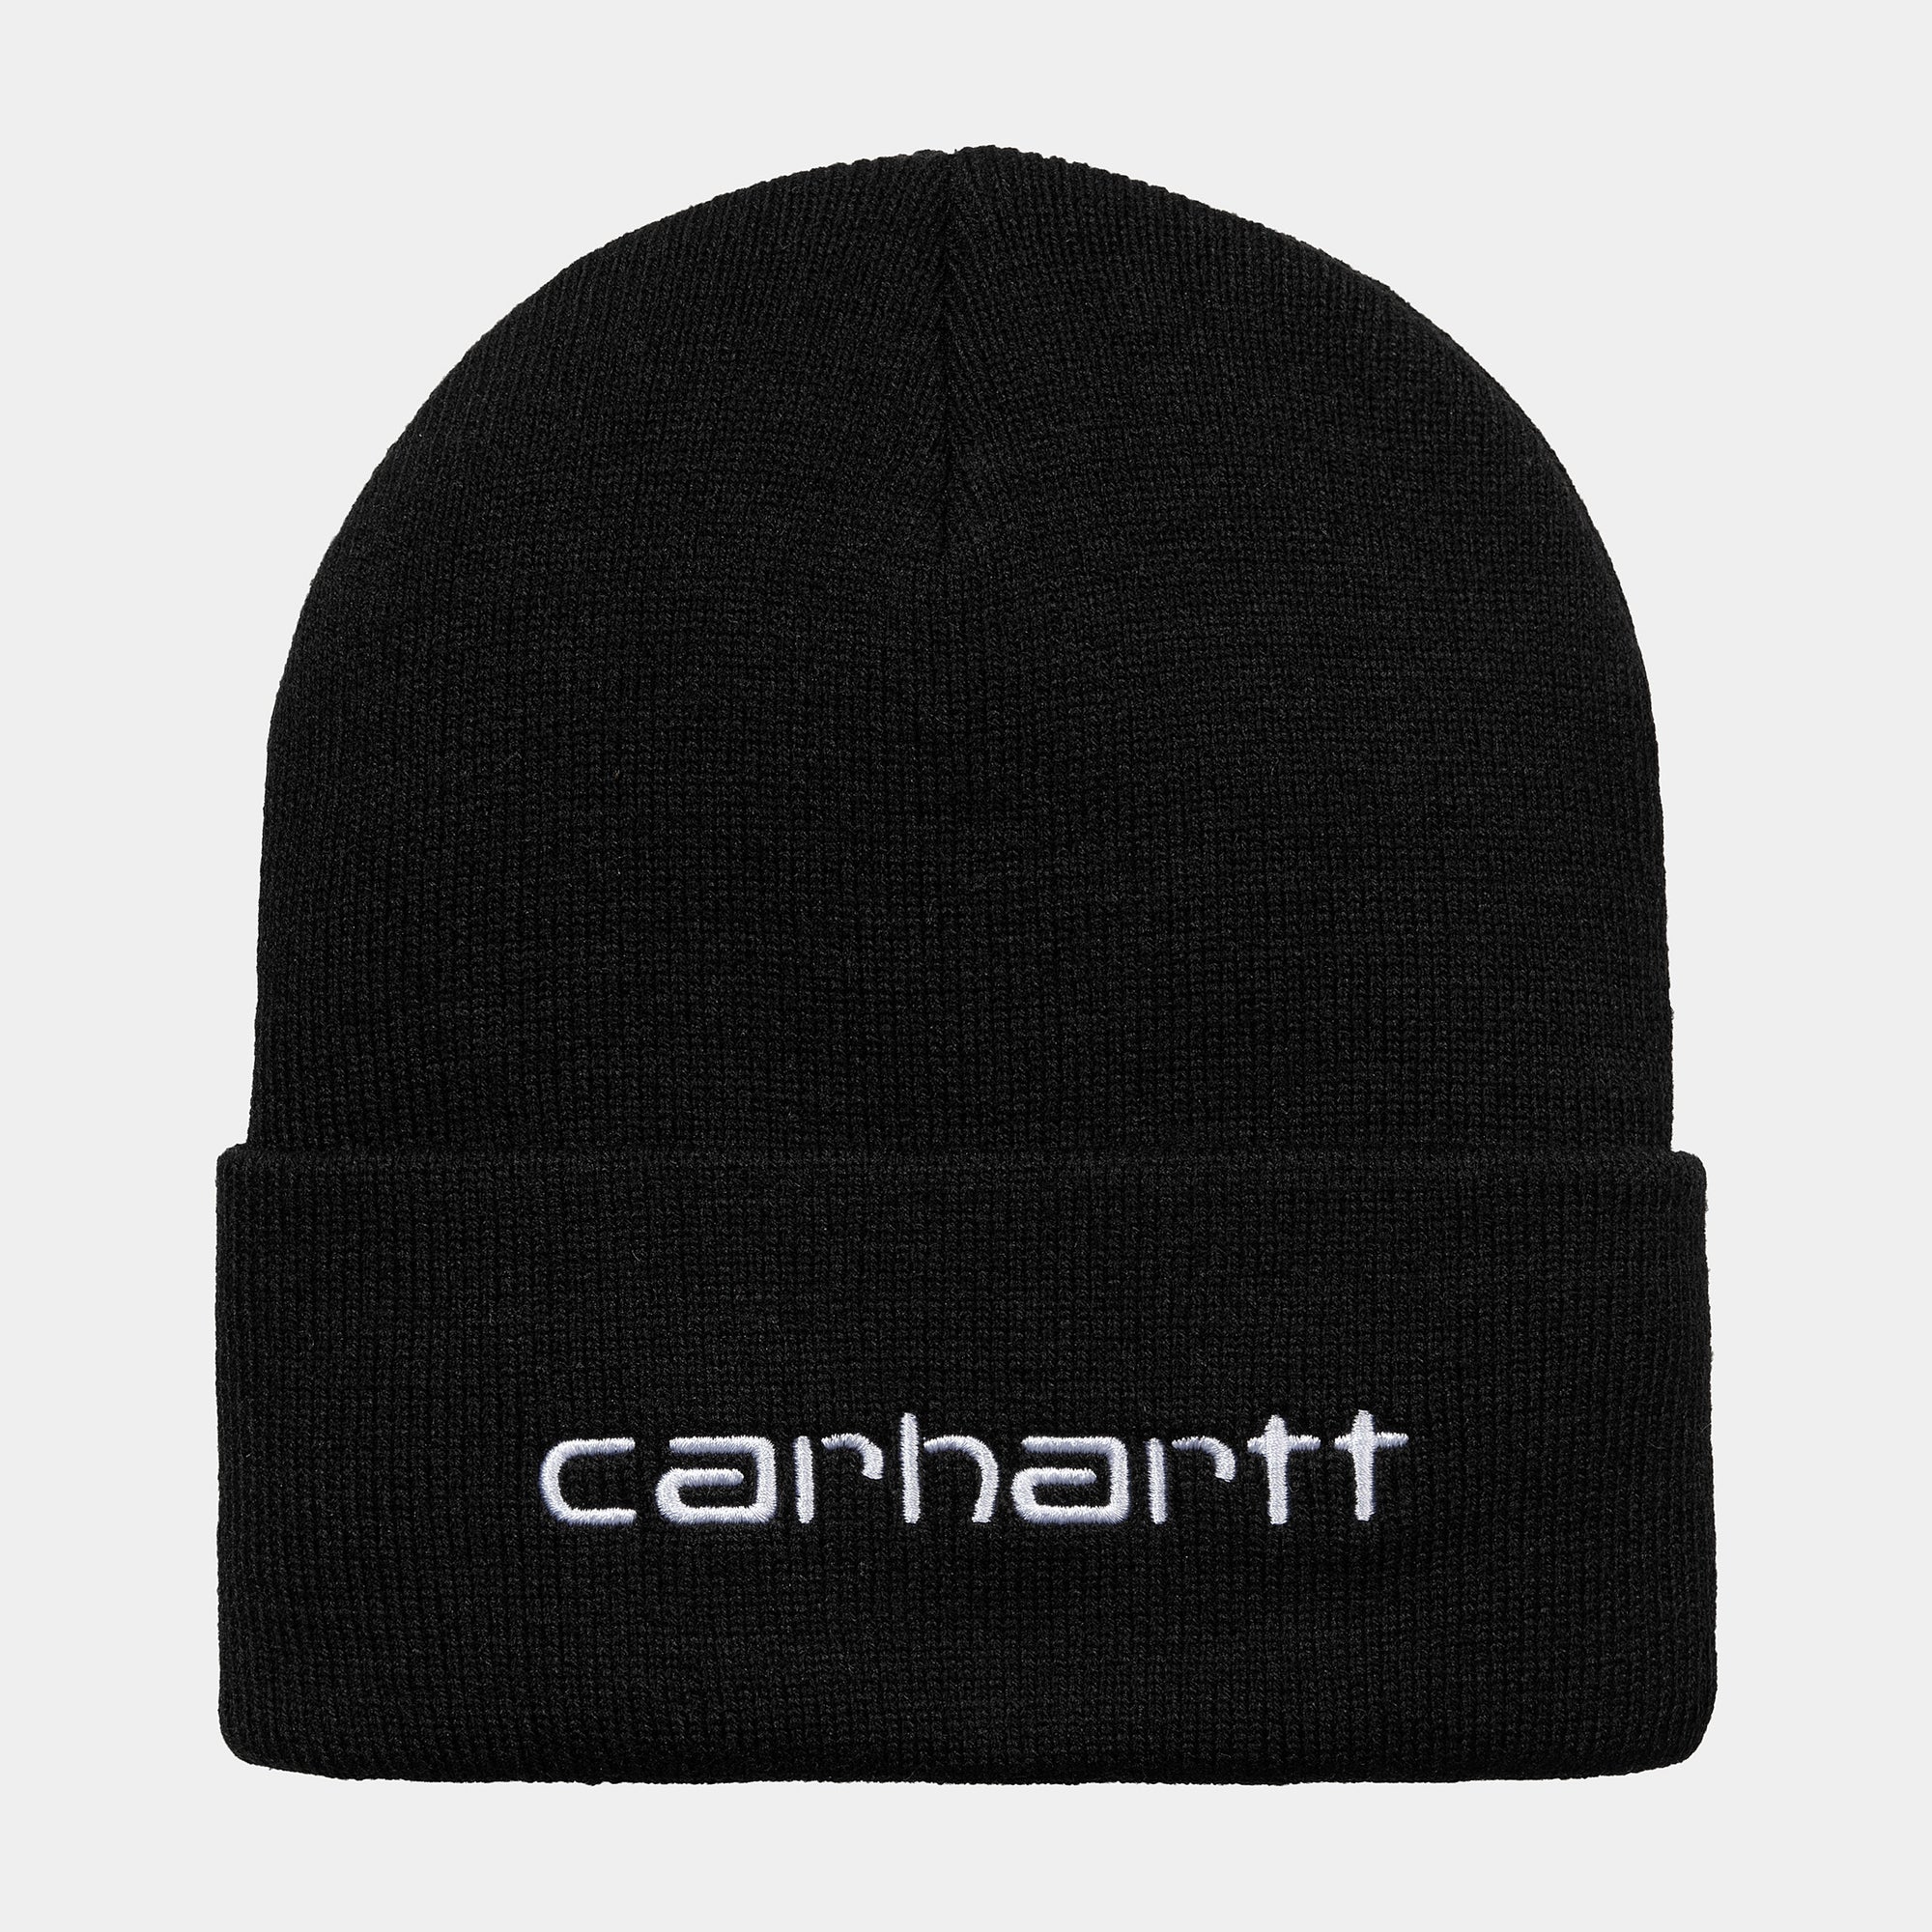 Carhartt cappellino a cuffia Script Beanie 1030884 0D2 black-white taglia unica